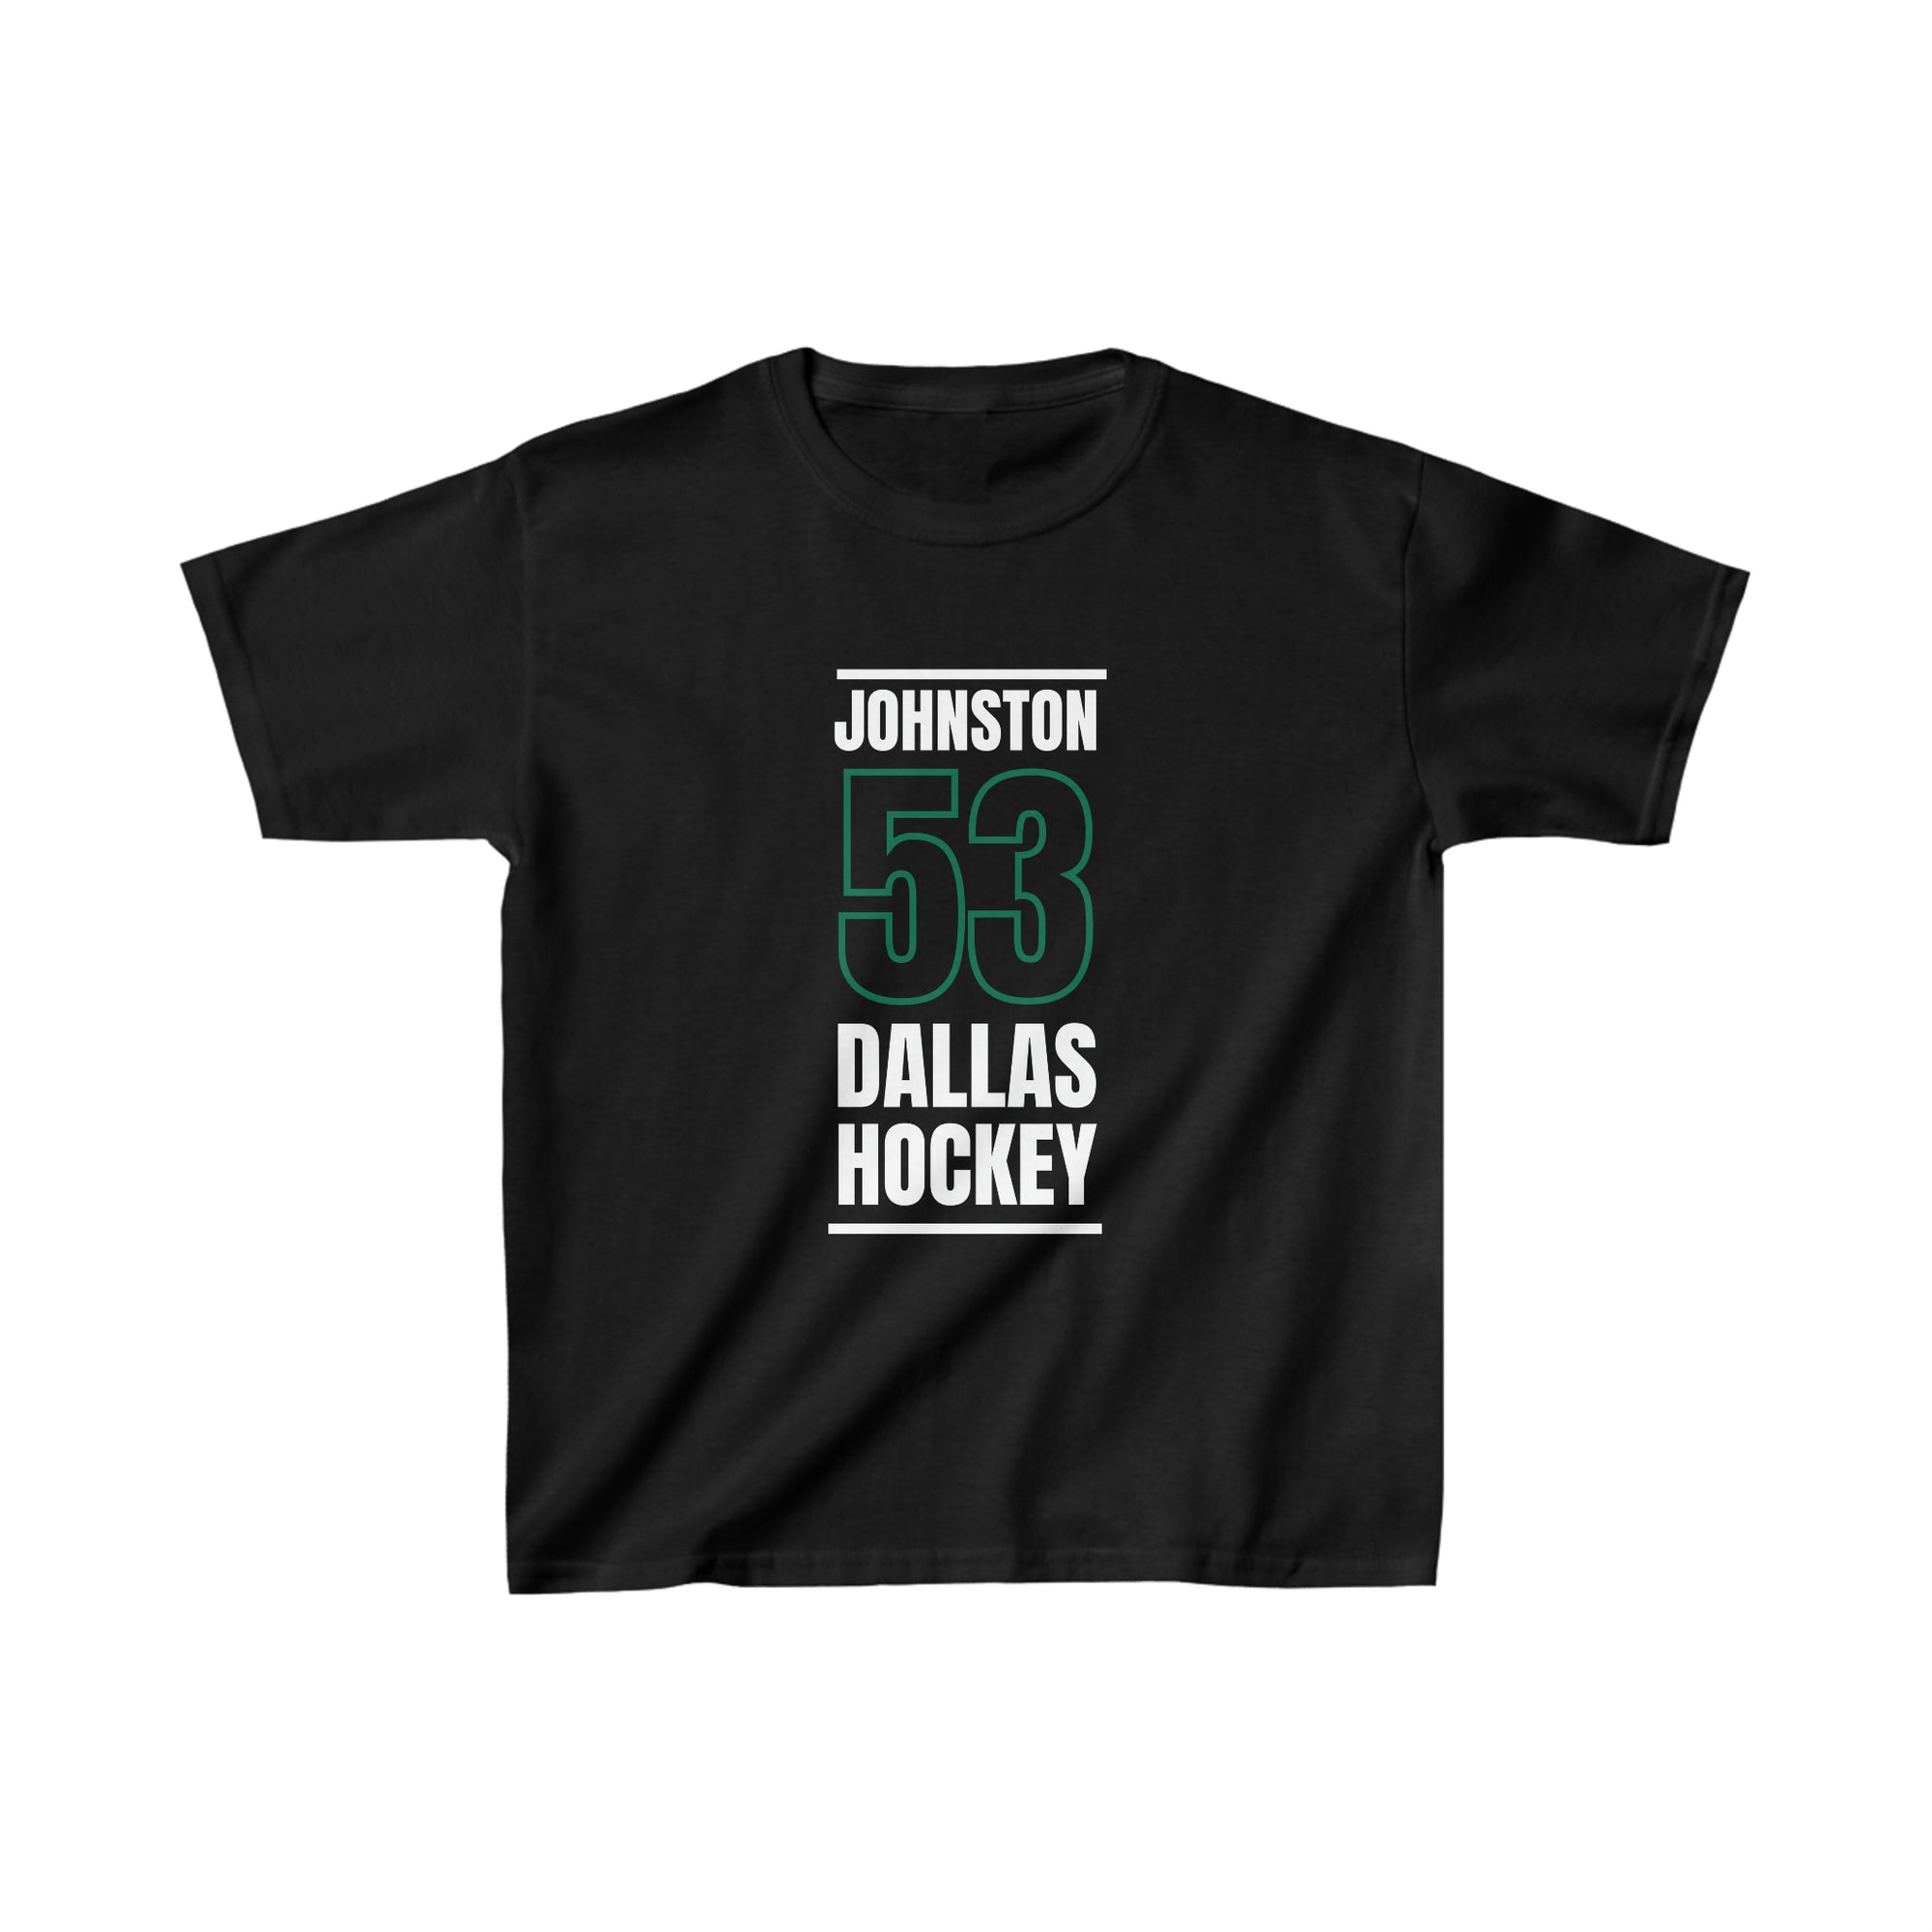 Johnston 53 Dallas Hockey Black Vertical Design Kids Tee